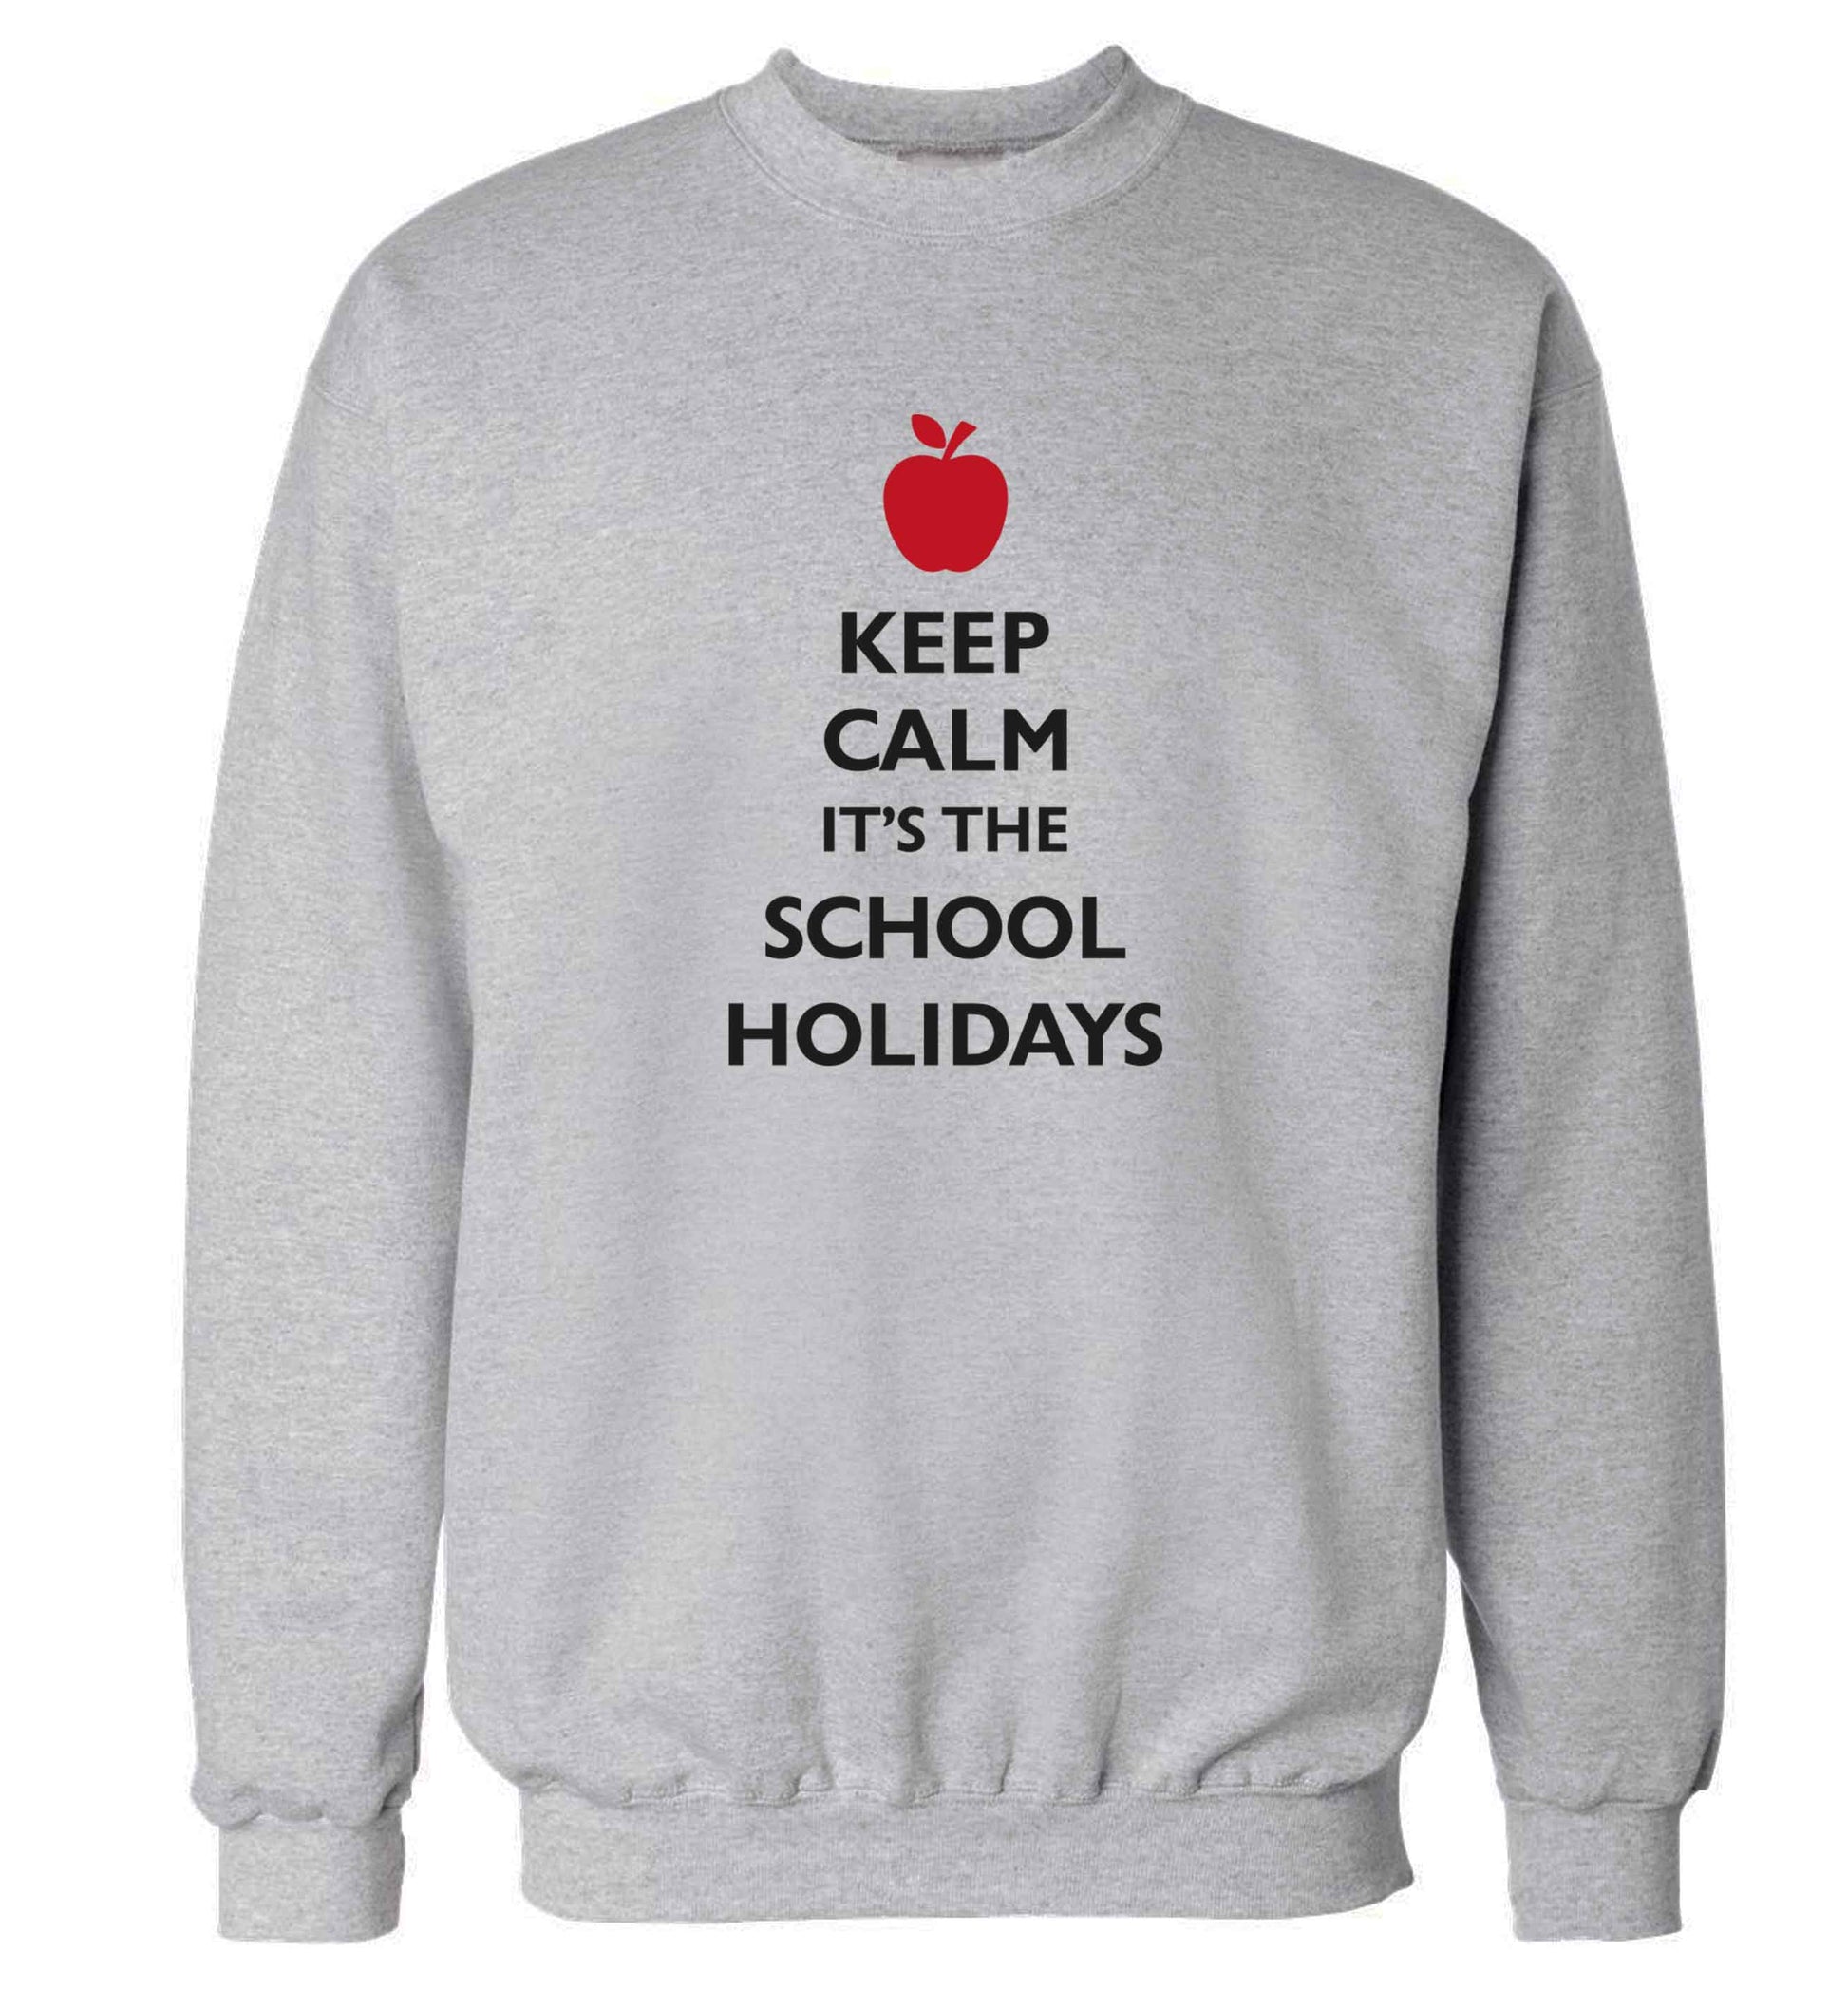 Keep calm it's the school holidays adult's unisex grey sweater 2XL